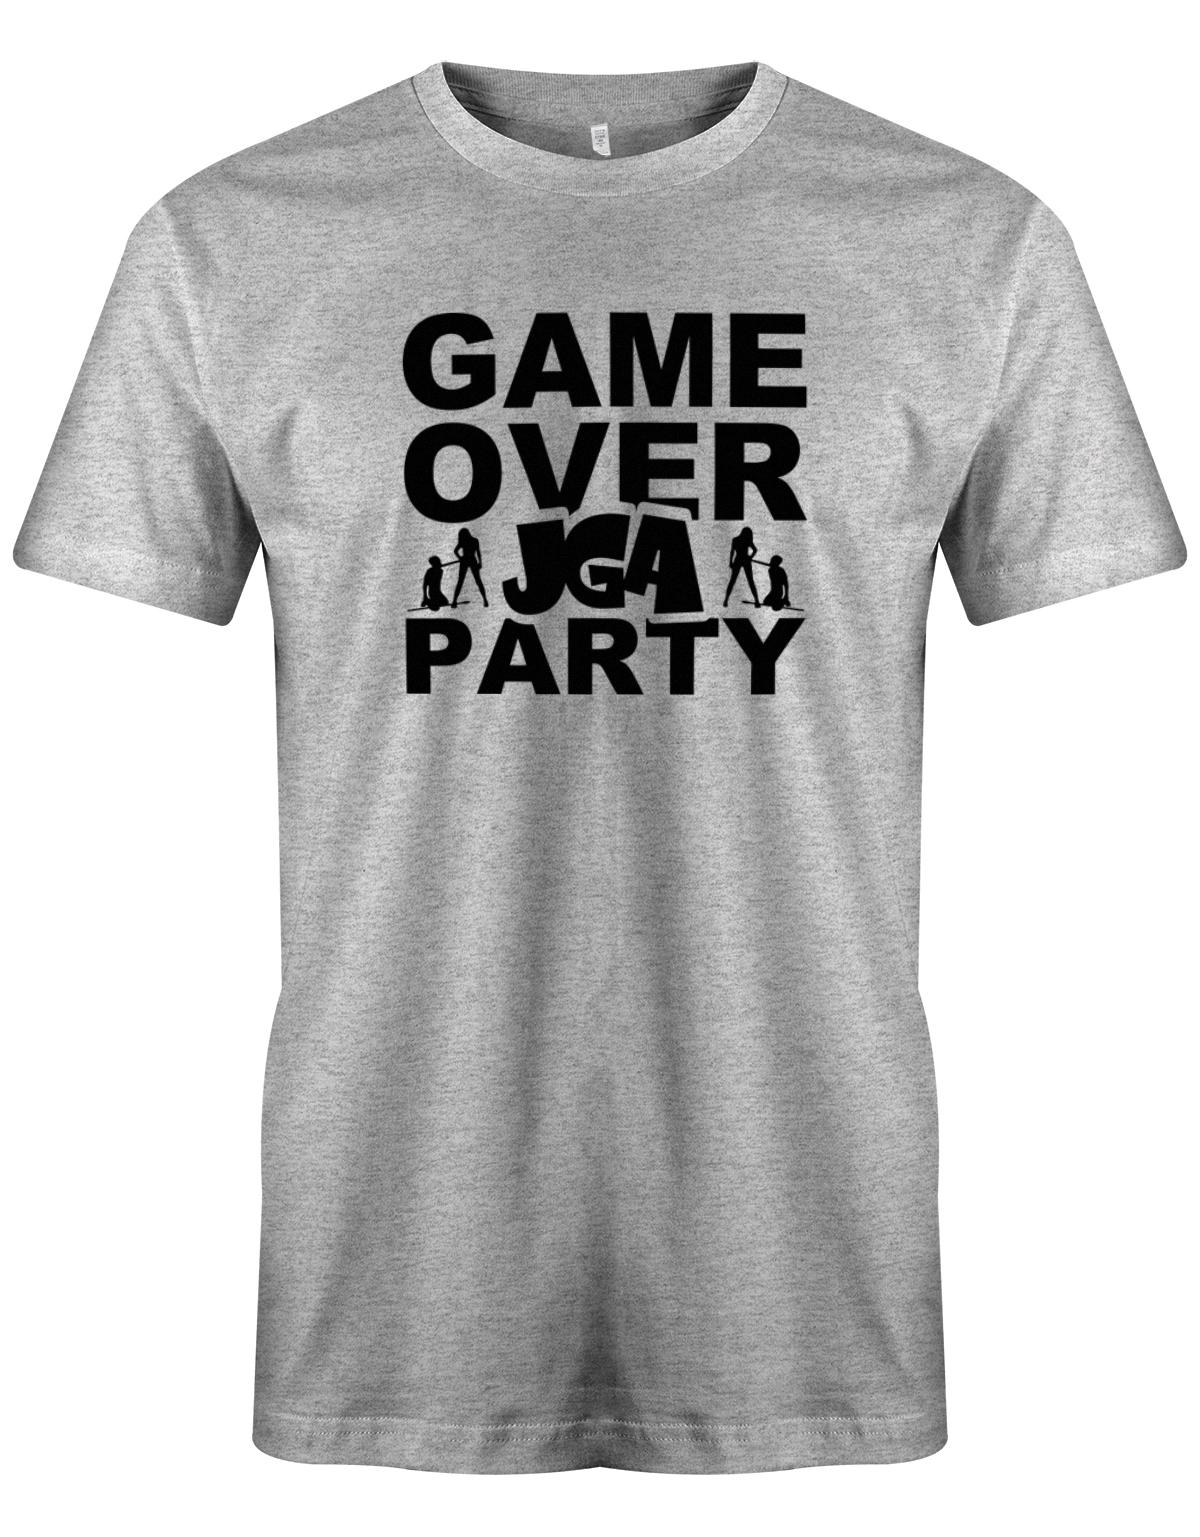 Game-Over-JGA-Party-Herren-Shirt-GRau